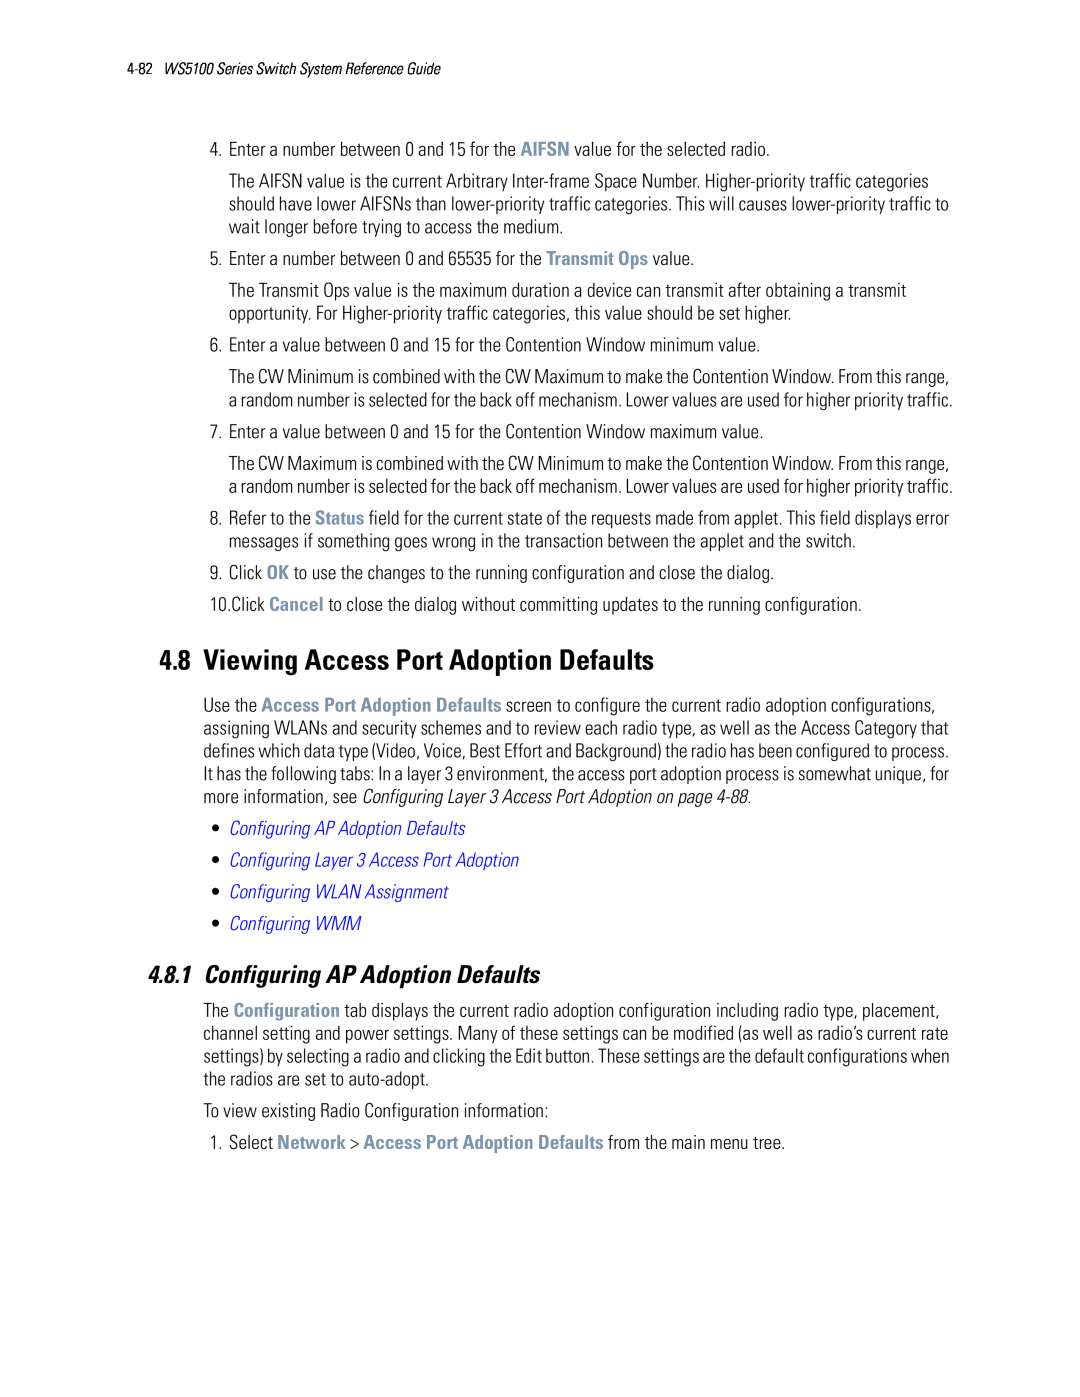 Motorola WS5100 manual Viewing Access Port Adoption Defaults, 4.8.1Configuring AP Adoption Defaults 